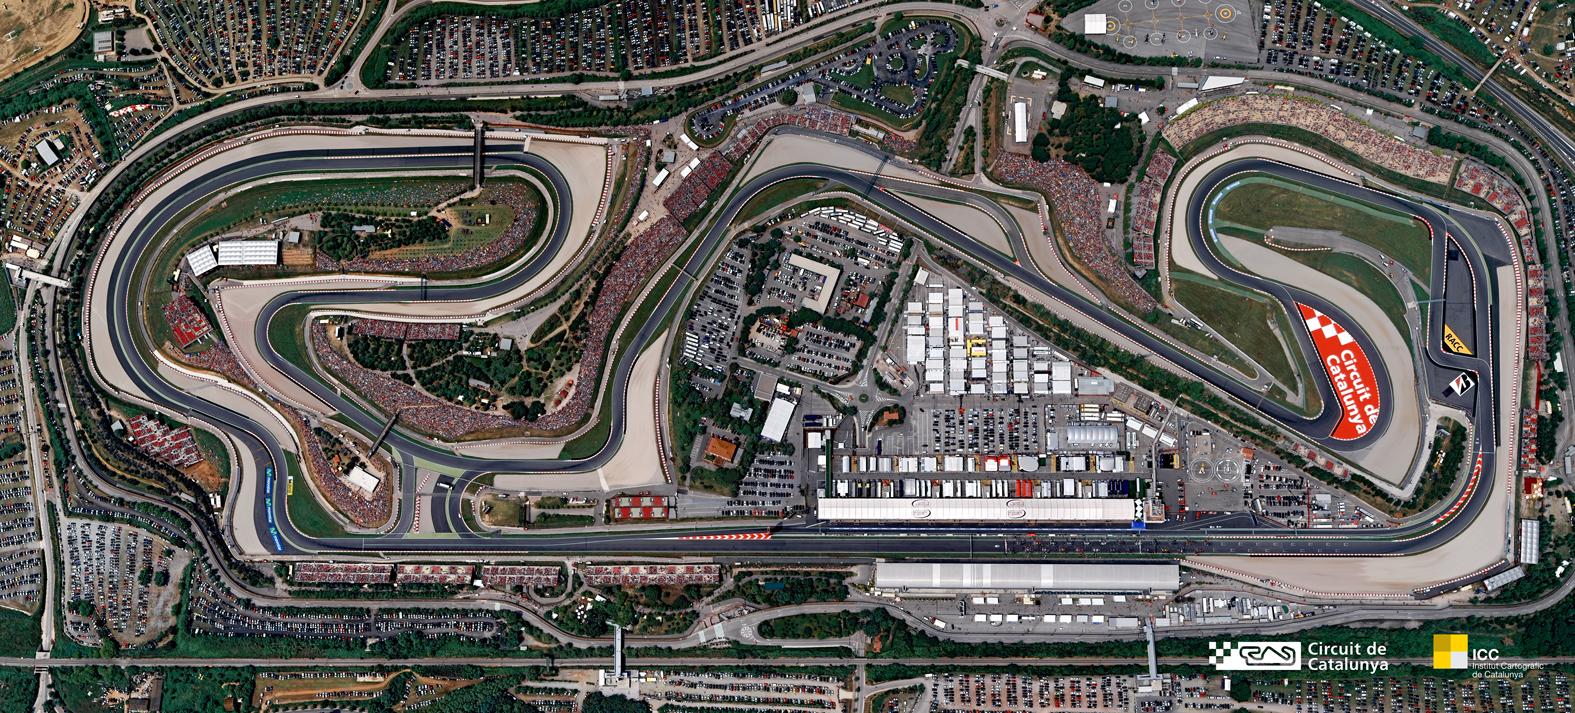 Circuit de Catalunya any 2010 sortida 